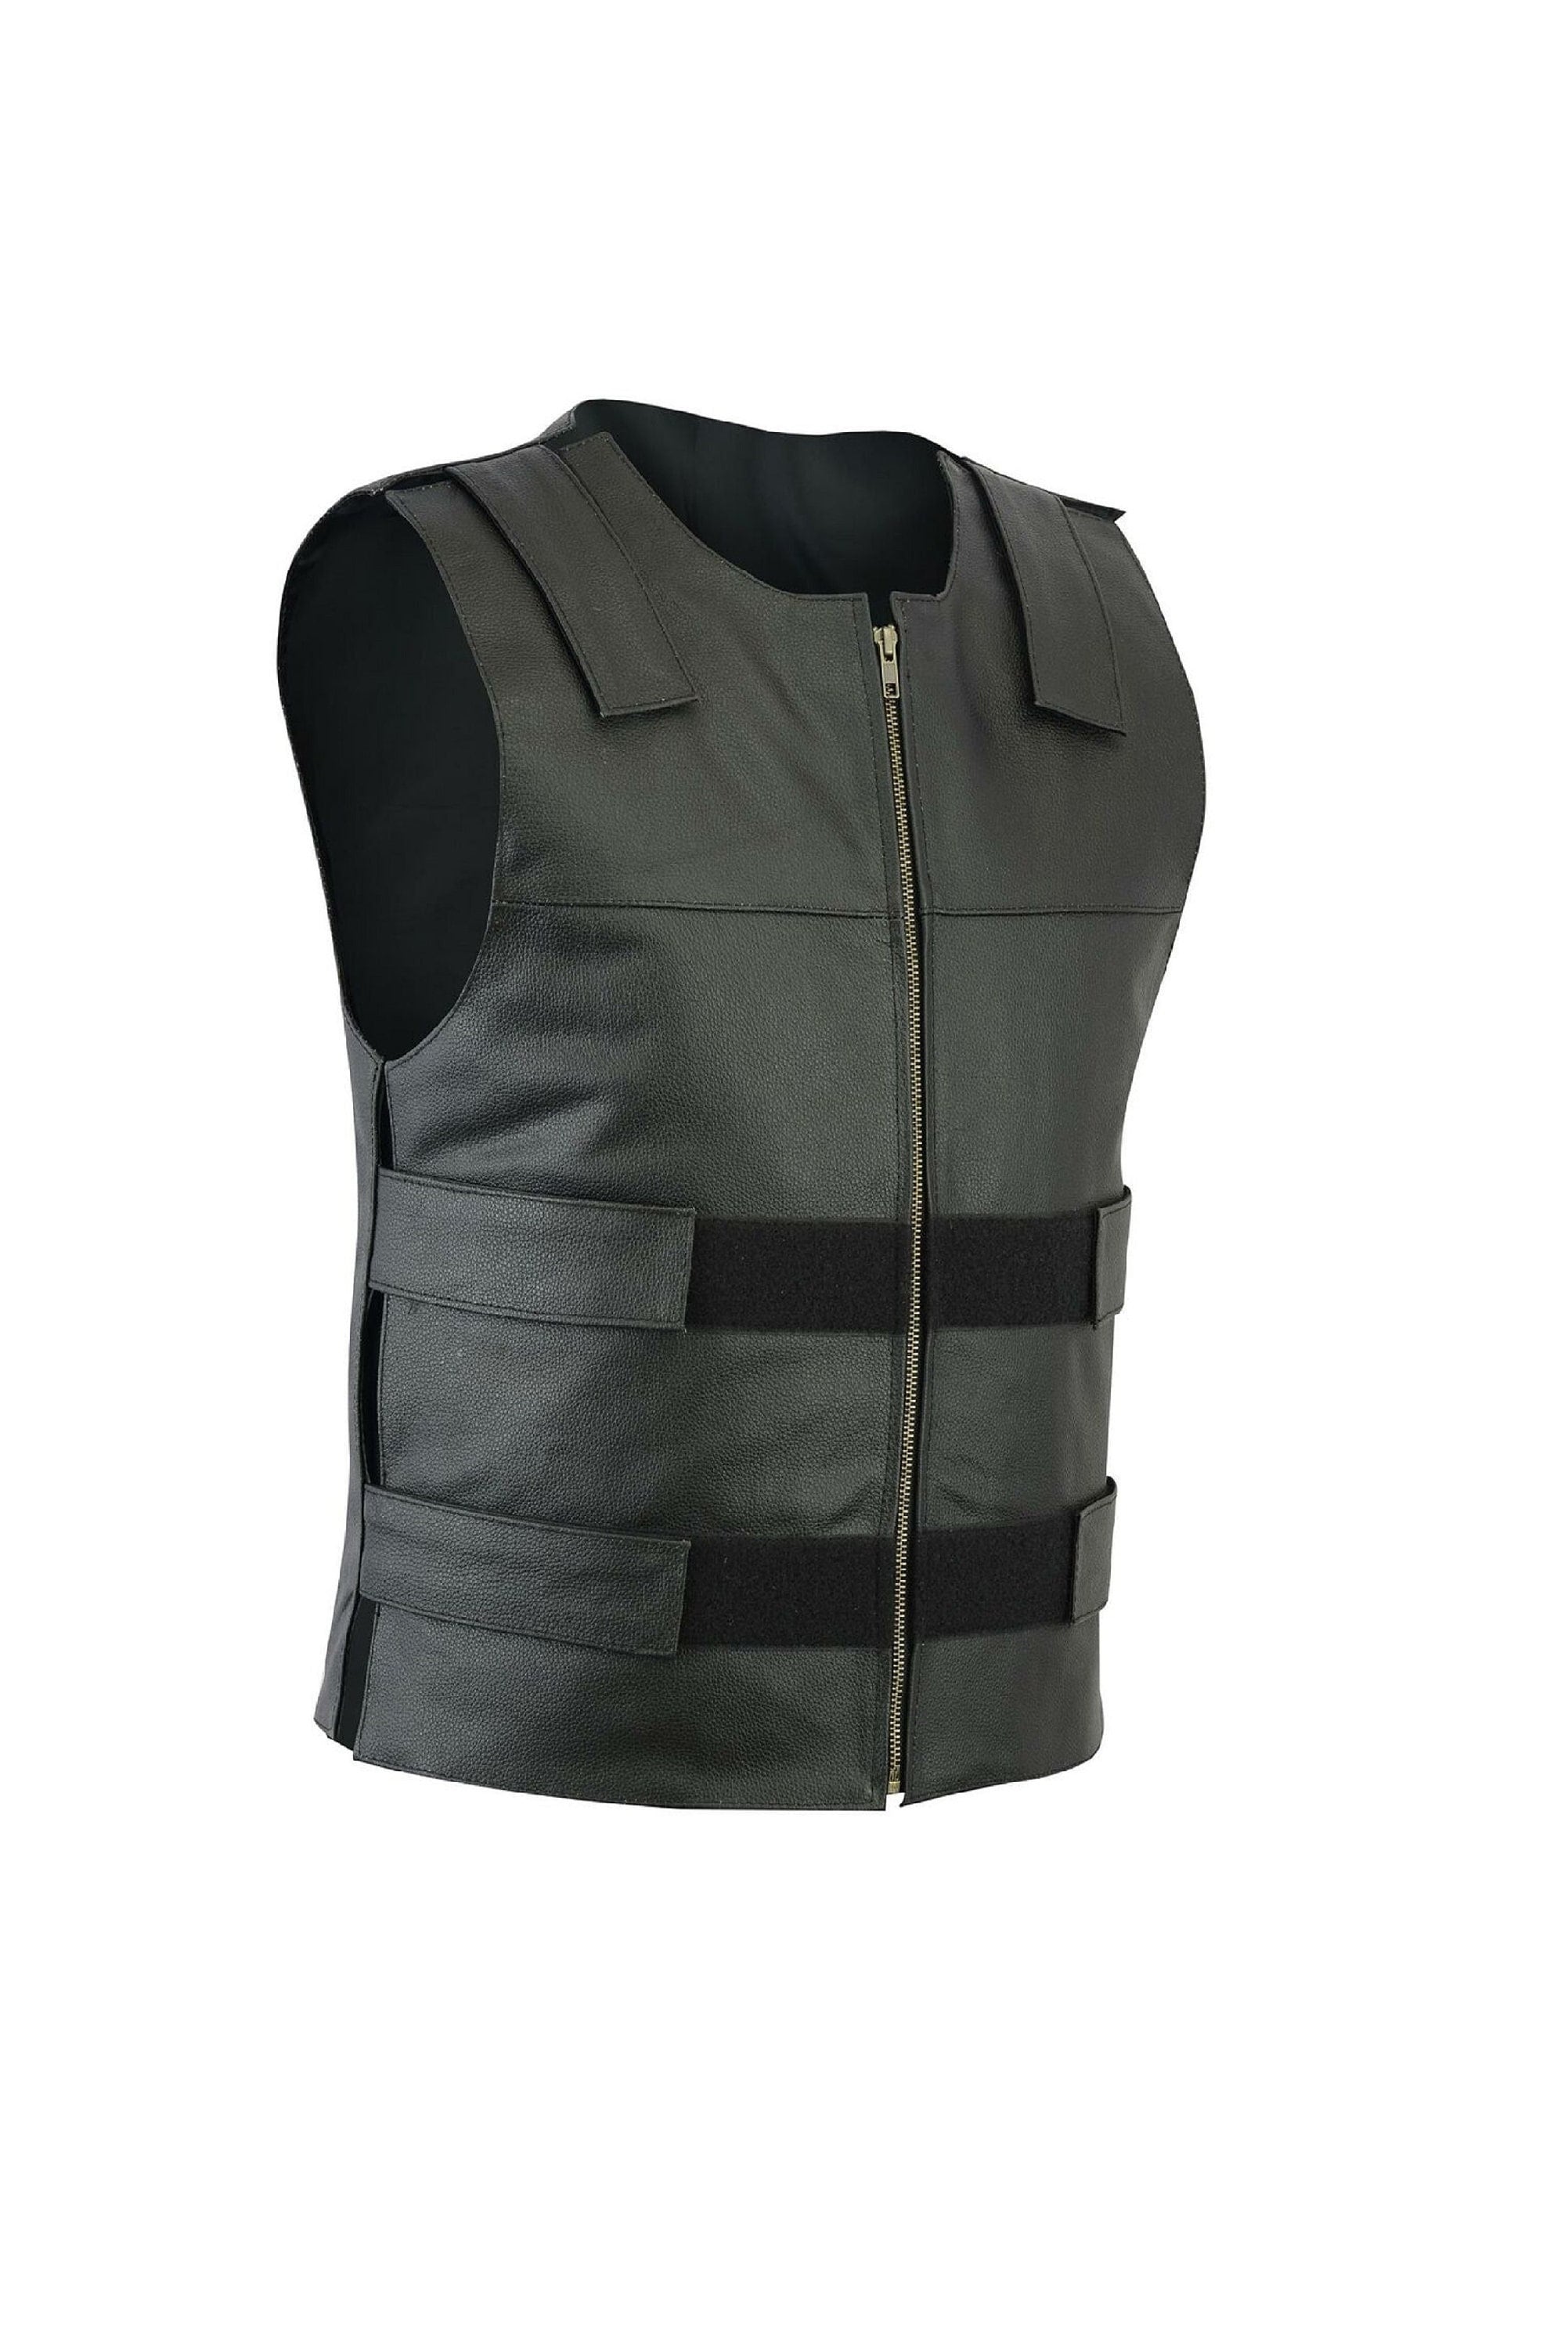 CUTTING UP A BRAND NEW LOUIS VUITTON BAG to make a Bulletproof Vest 